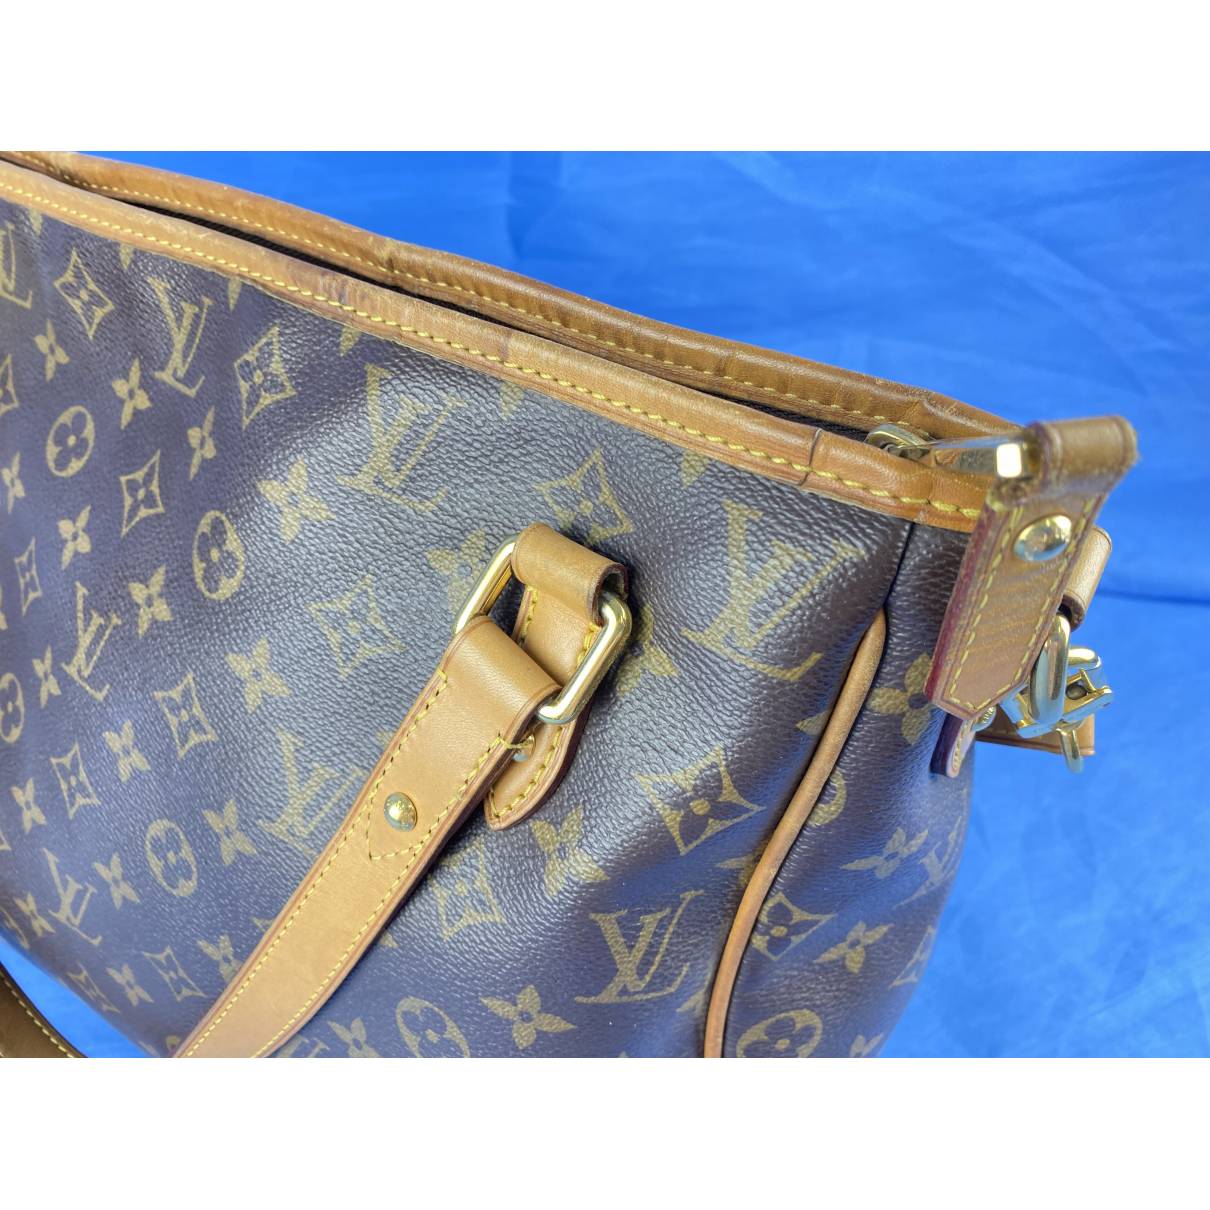 Estrela leather crossbody bag Louis Vuitton Brown in Leather